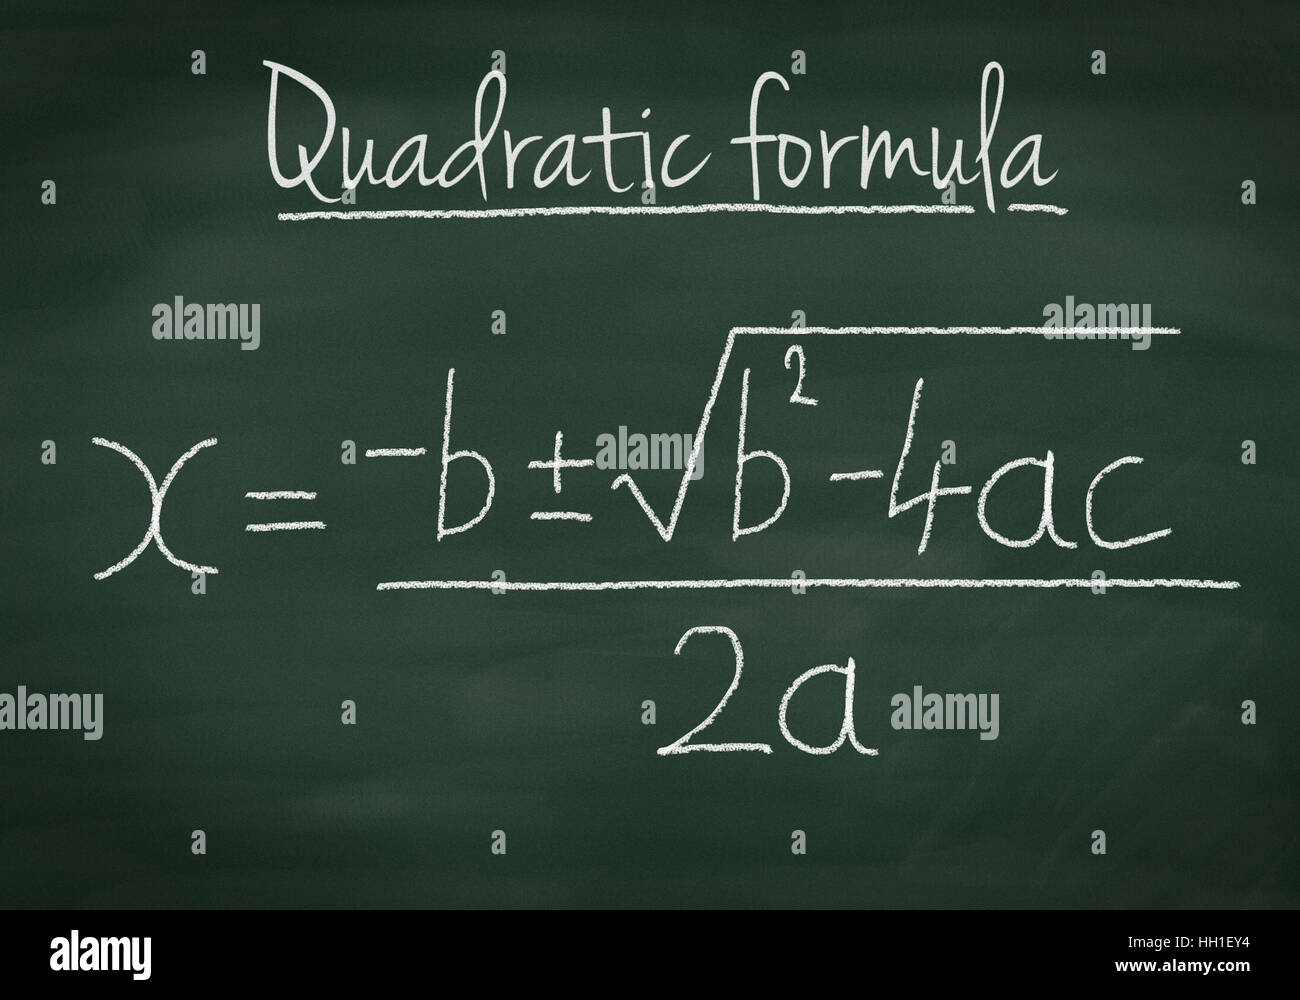 Quadratic formula explained on a chalkboard Stock Photo